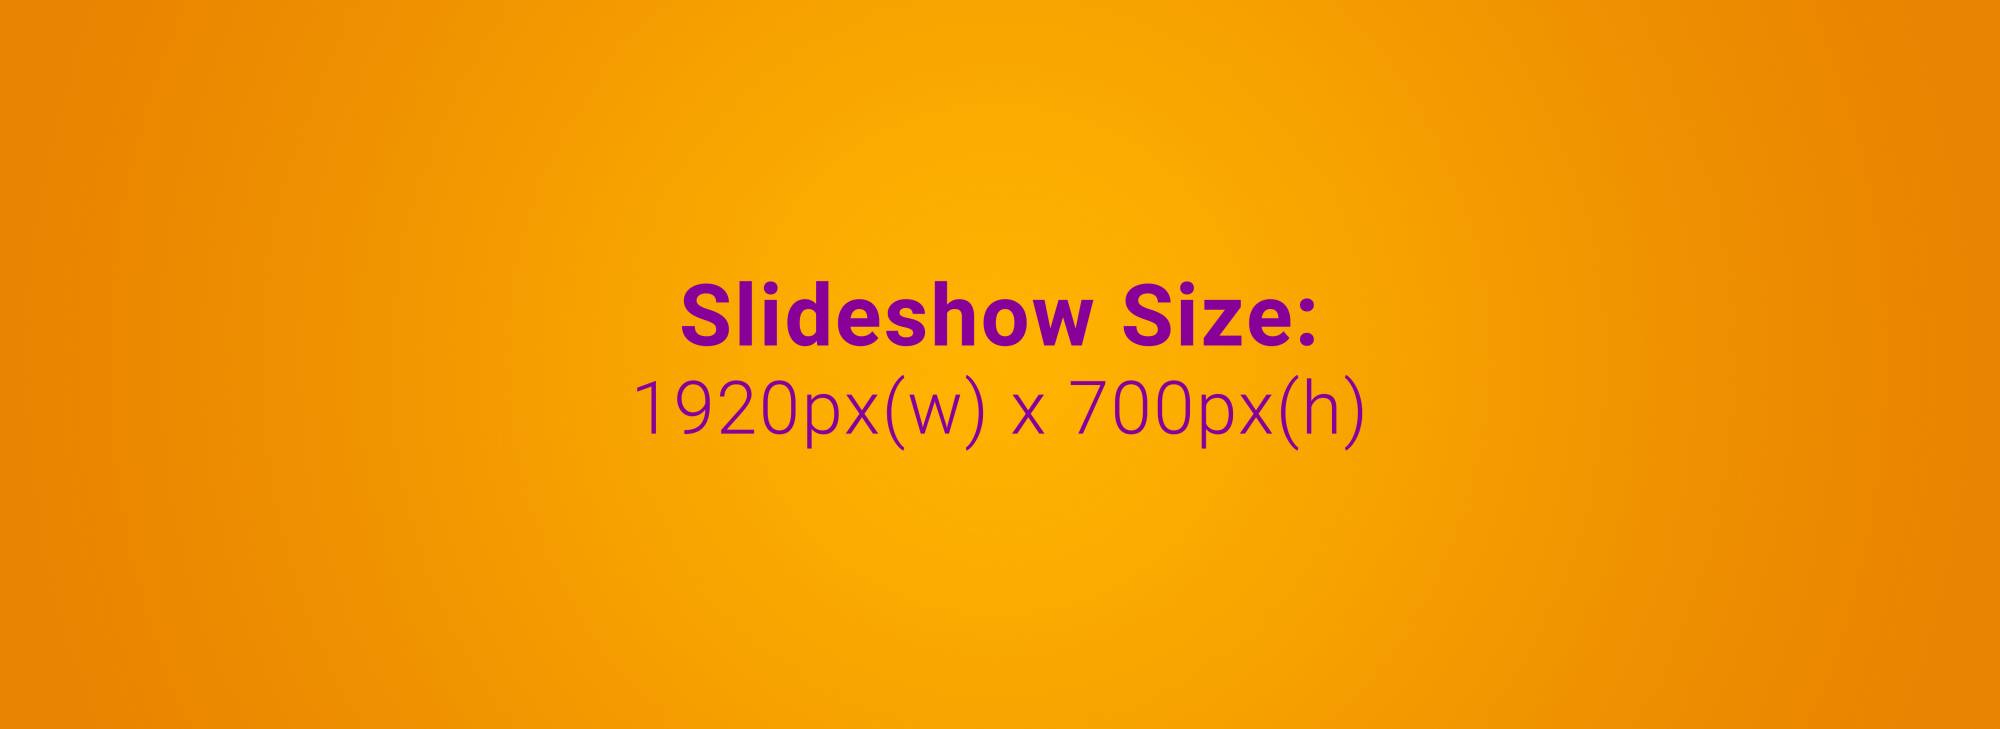 Slideshow size